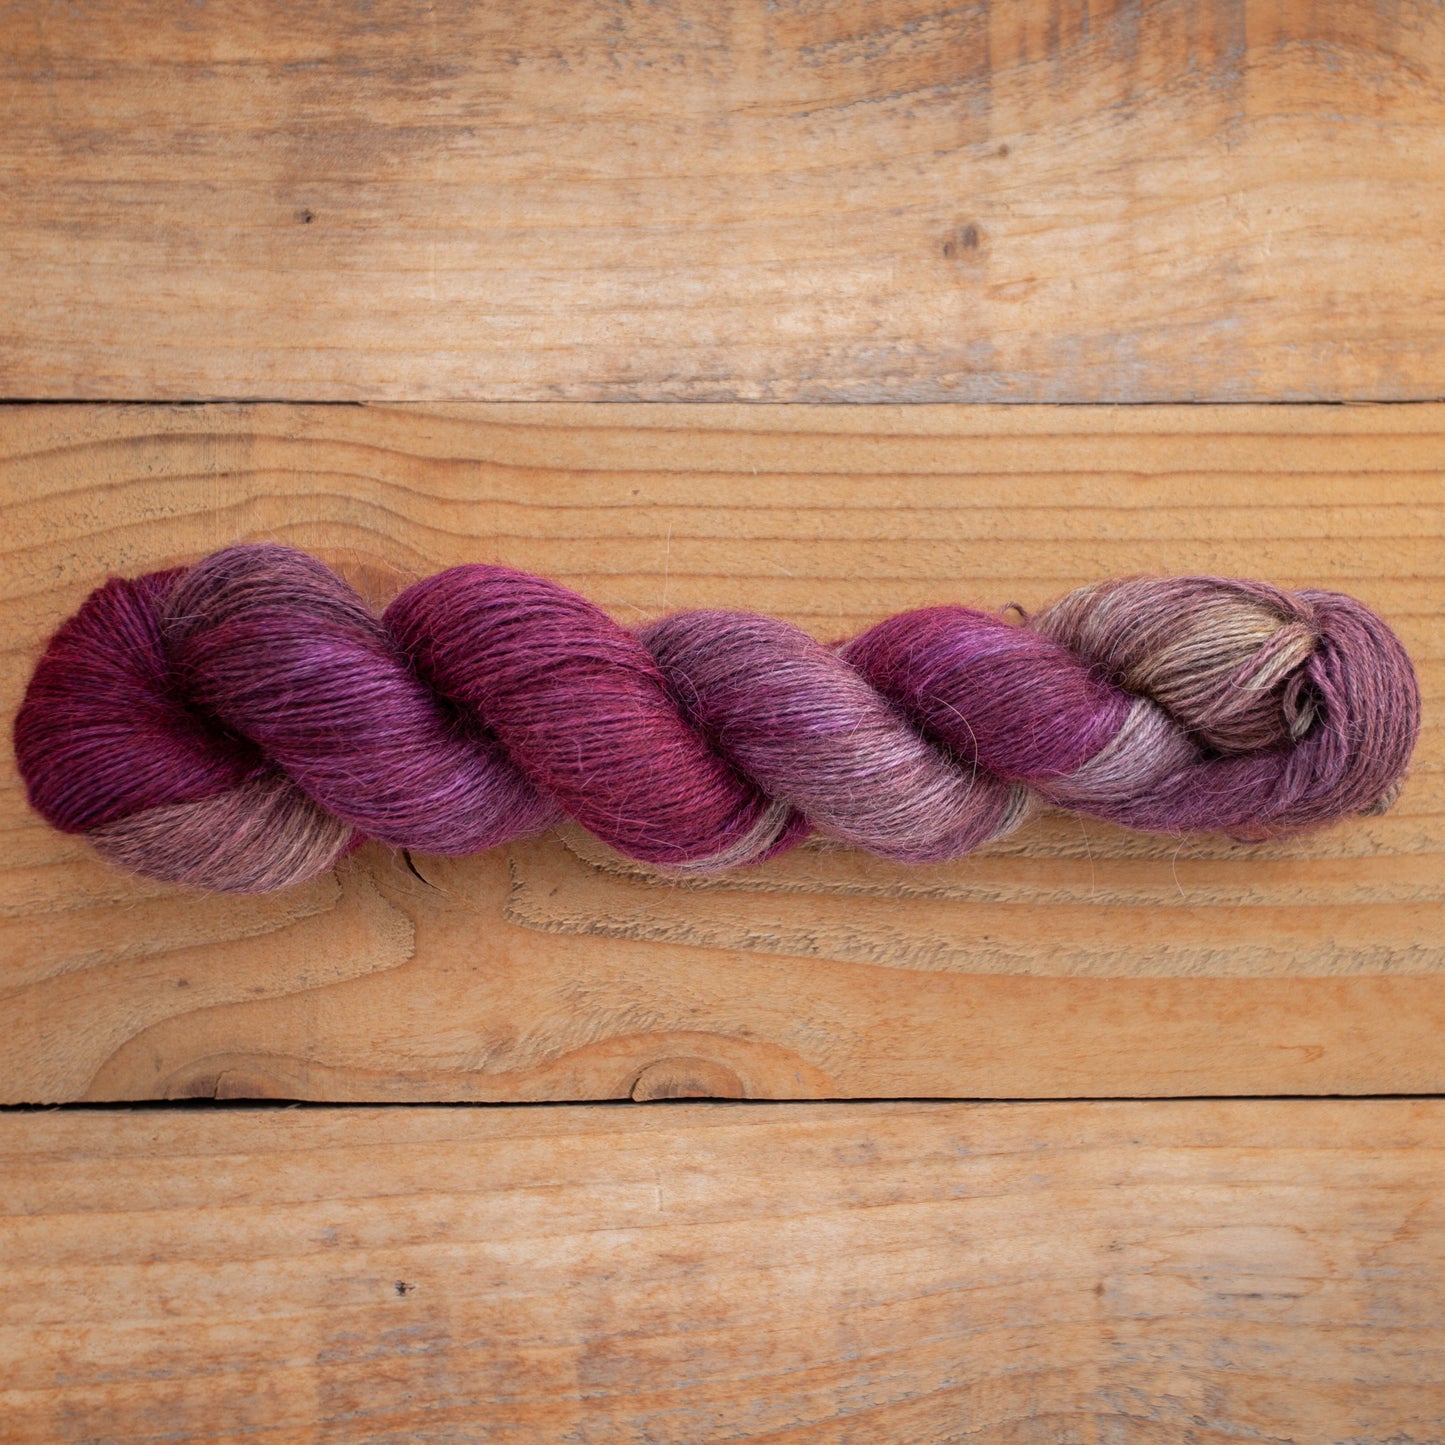 100% Baby Llama hand dyed yarn - Burgundy/Honey - ready to ship